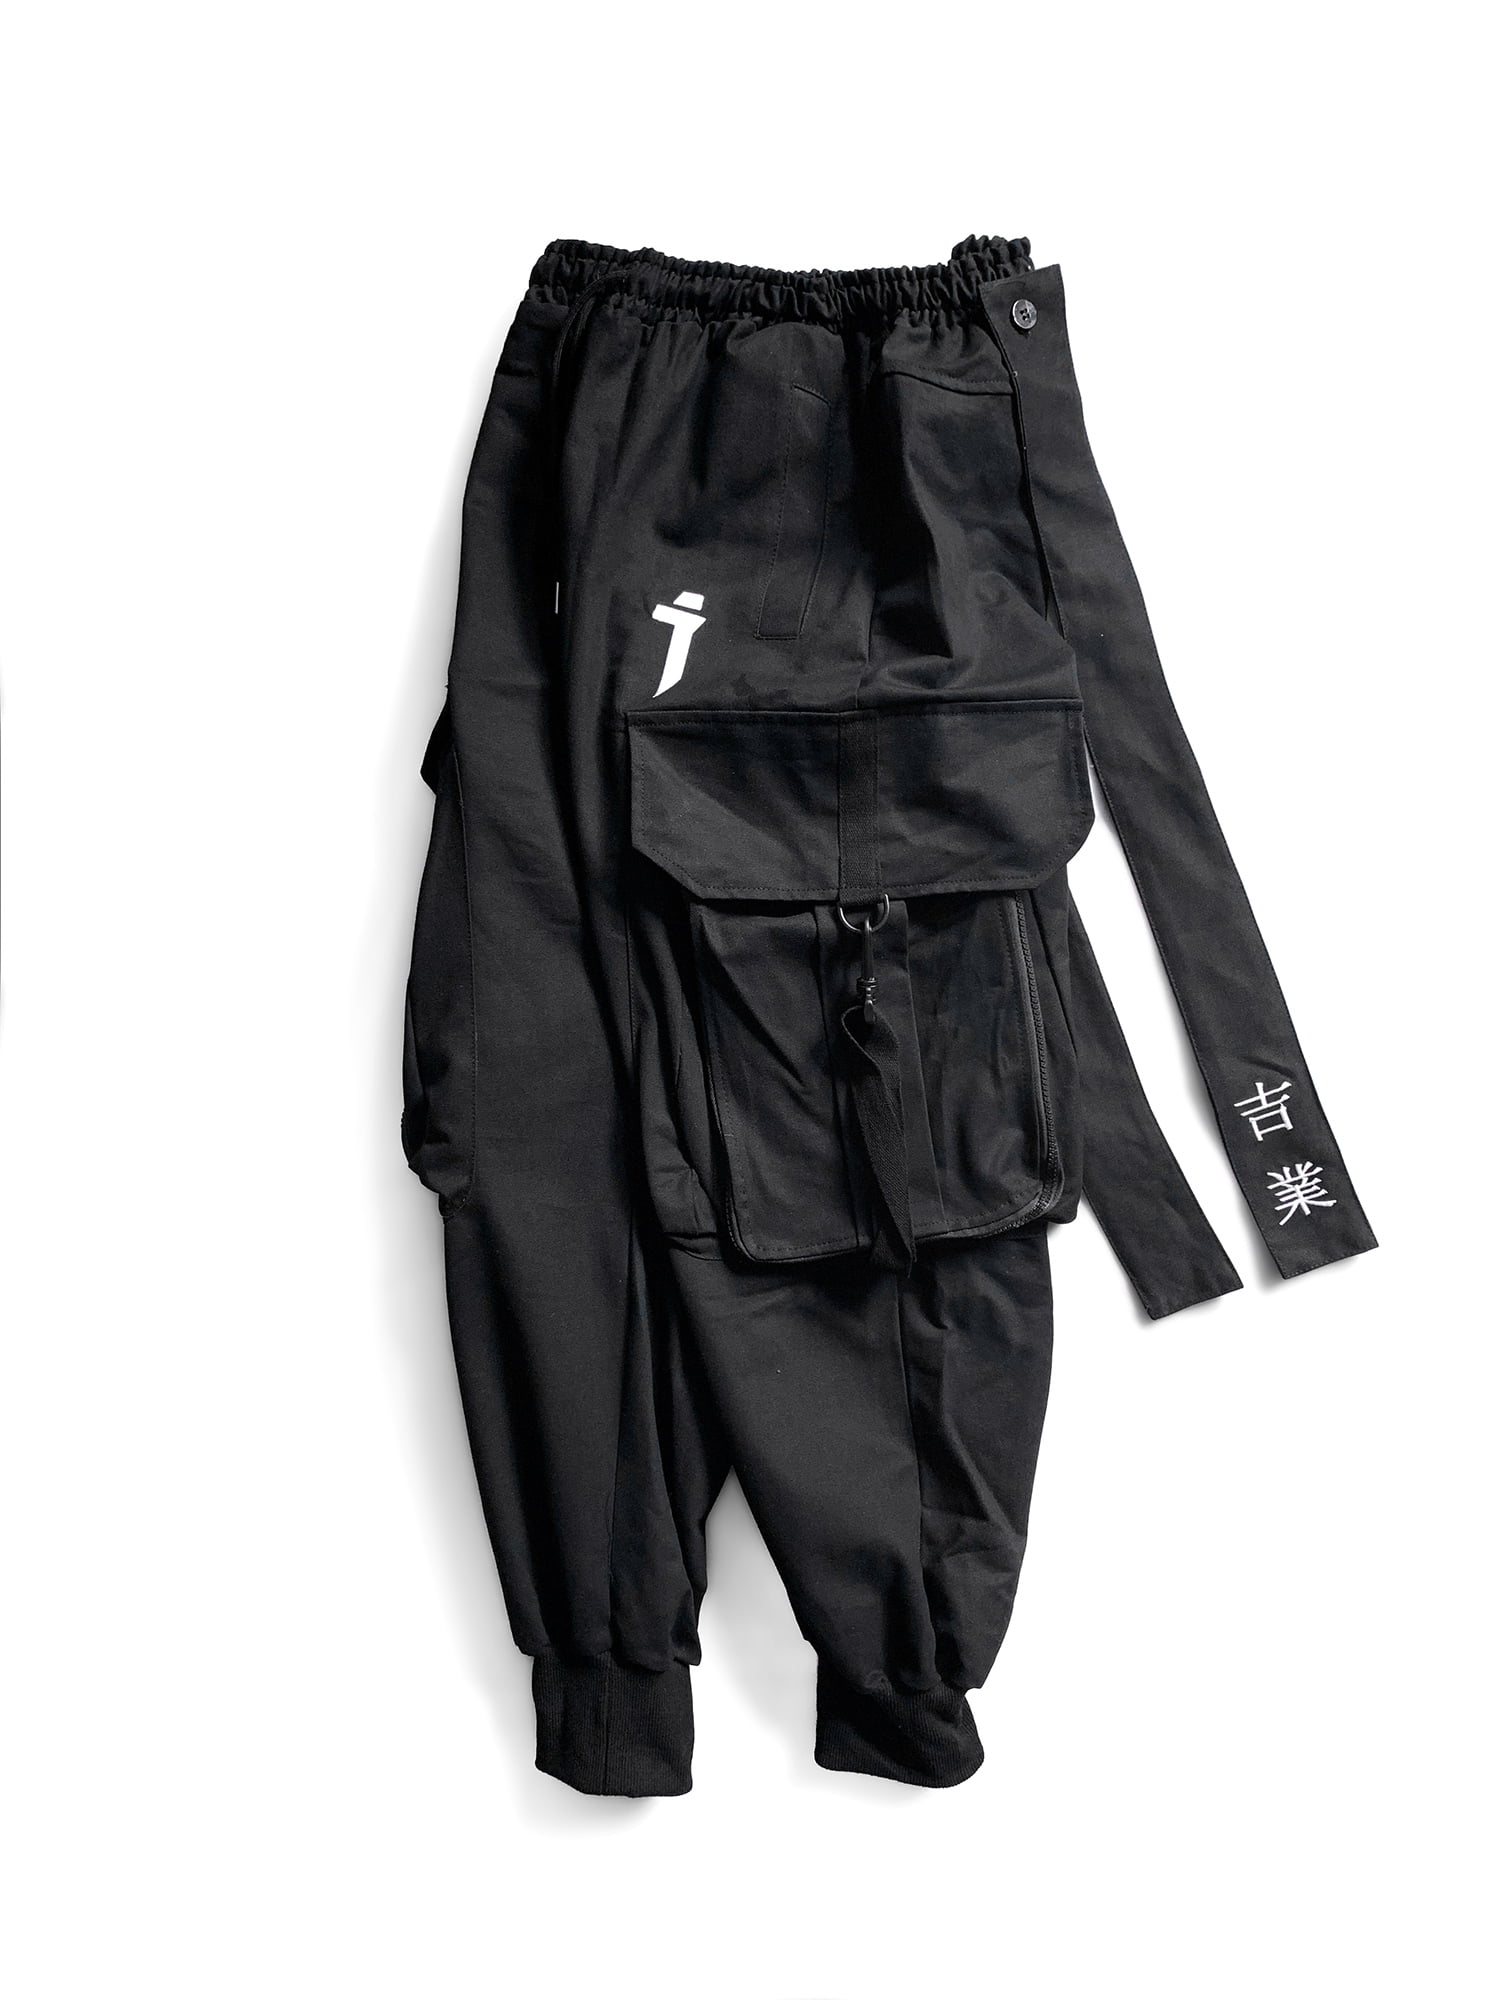 Niepce Inc Japanese Streetwear Black Men's Cargo Pants (Black-p8, S) at   Men's Clothing store